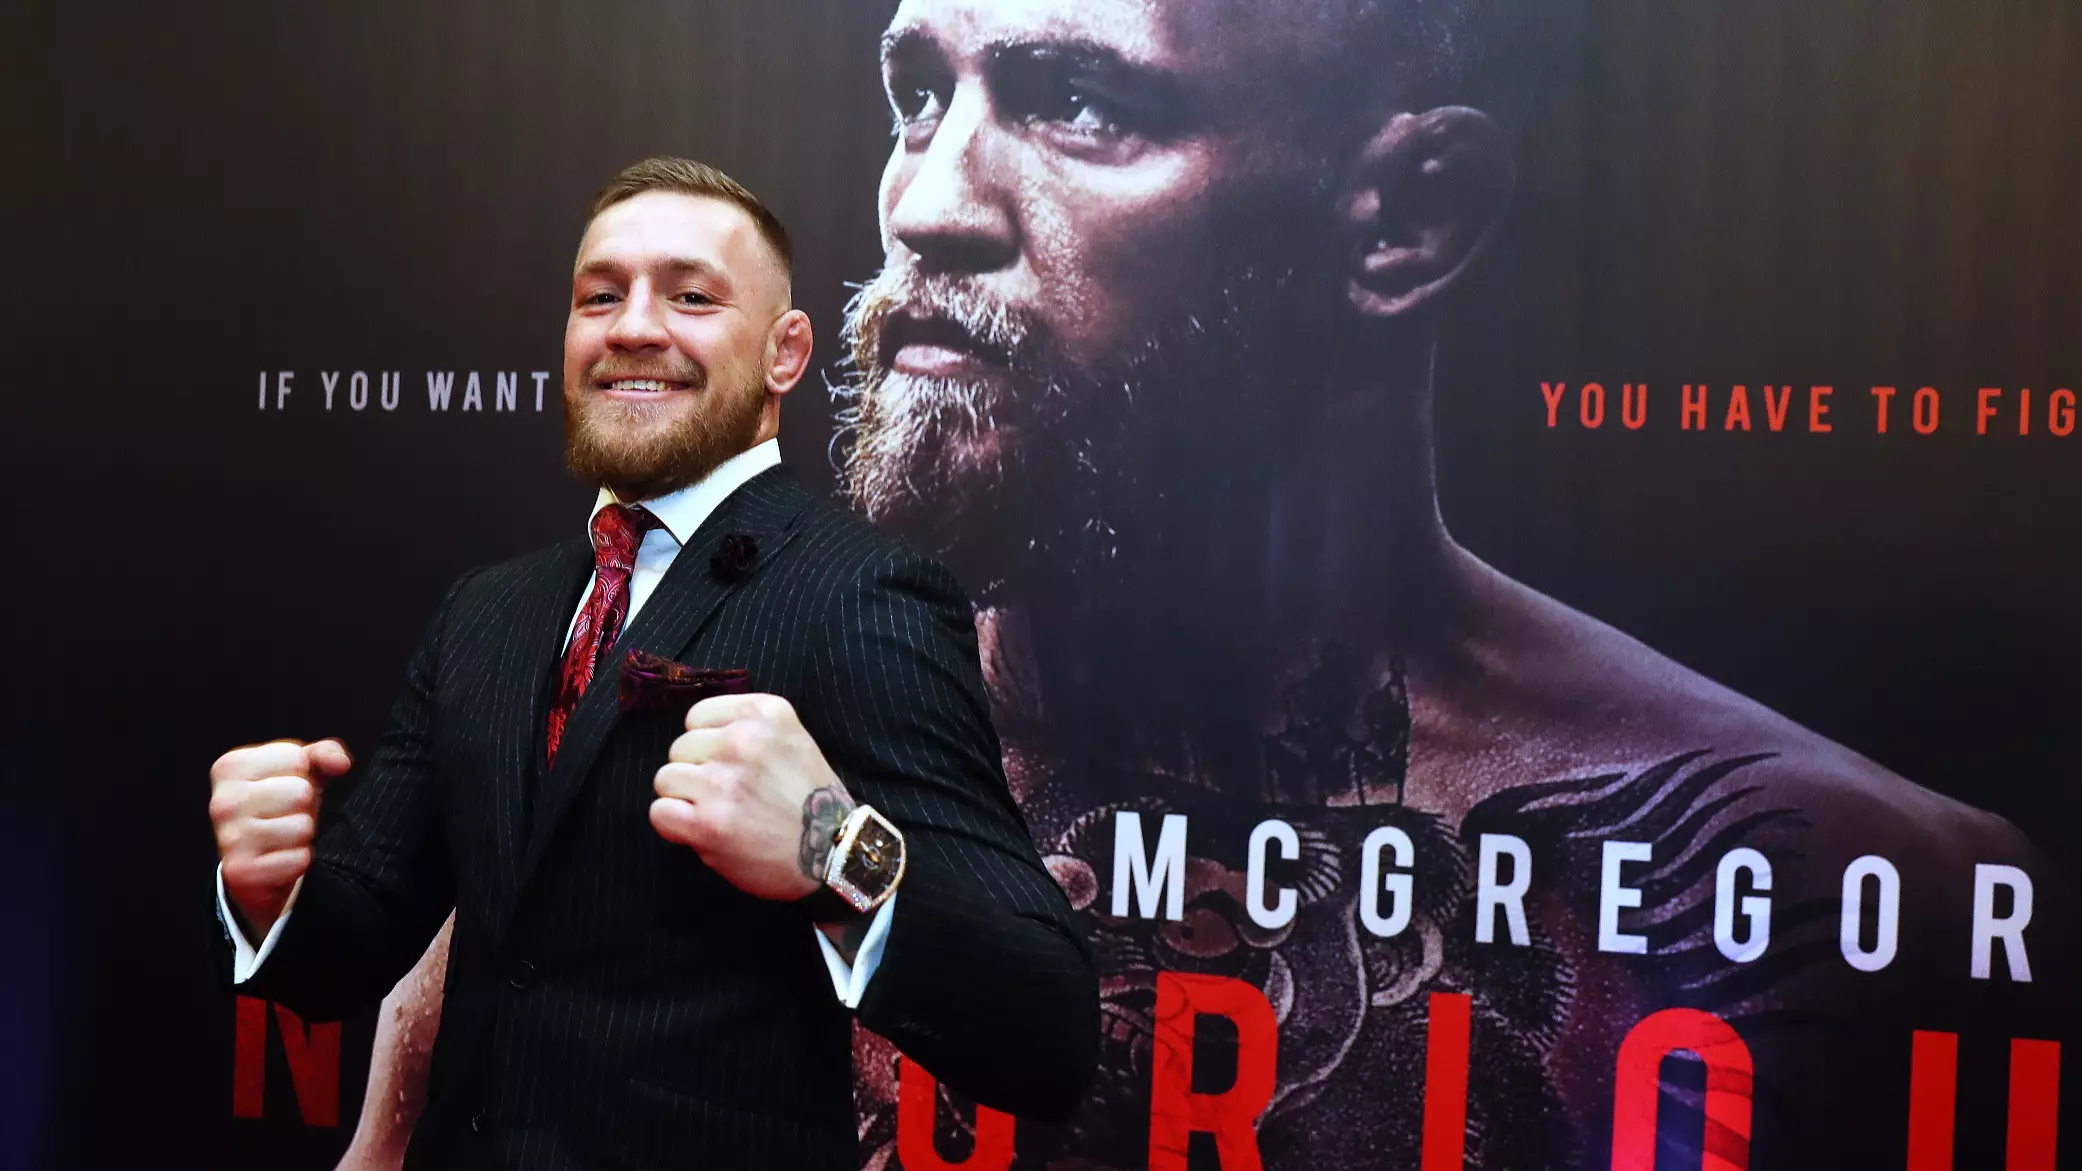 McGrgor Wants MMA Fight Next, Despite Manny Pacquiao Rumours 